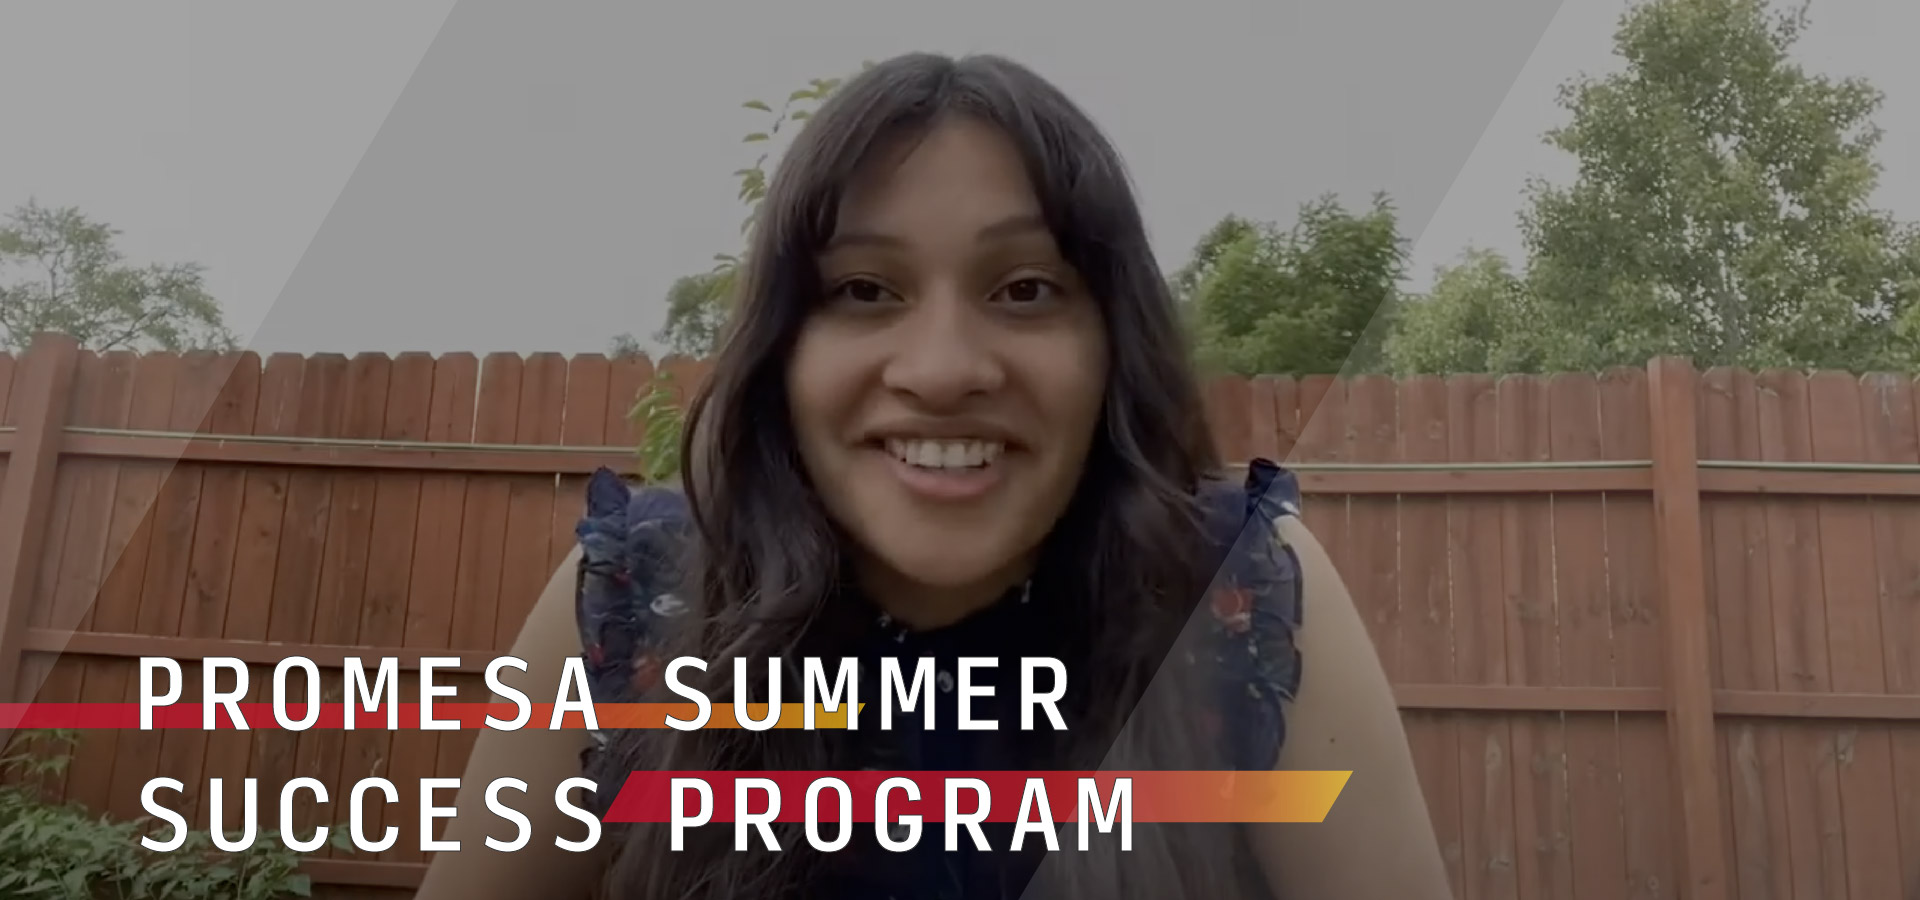 Promesa summer success student